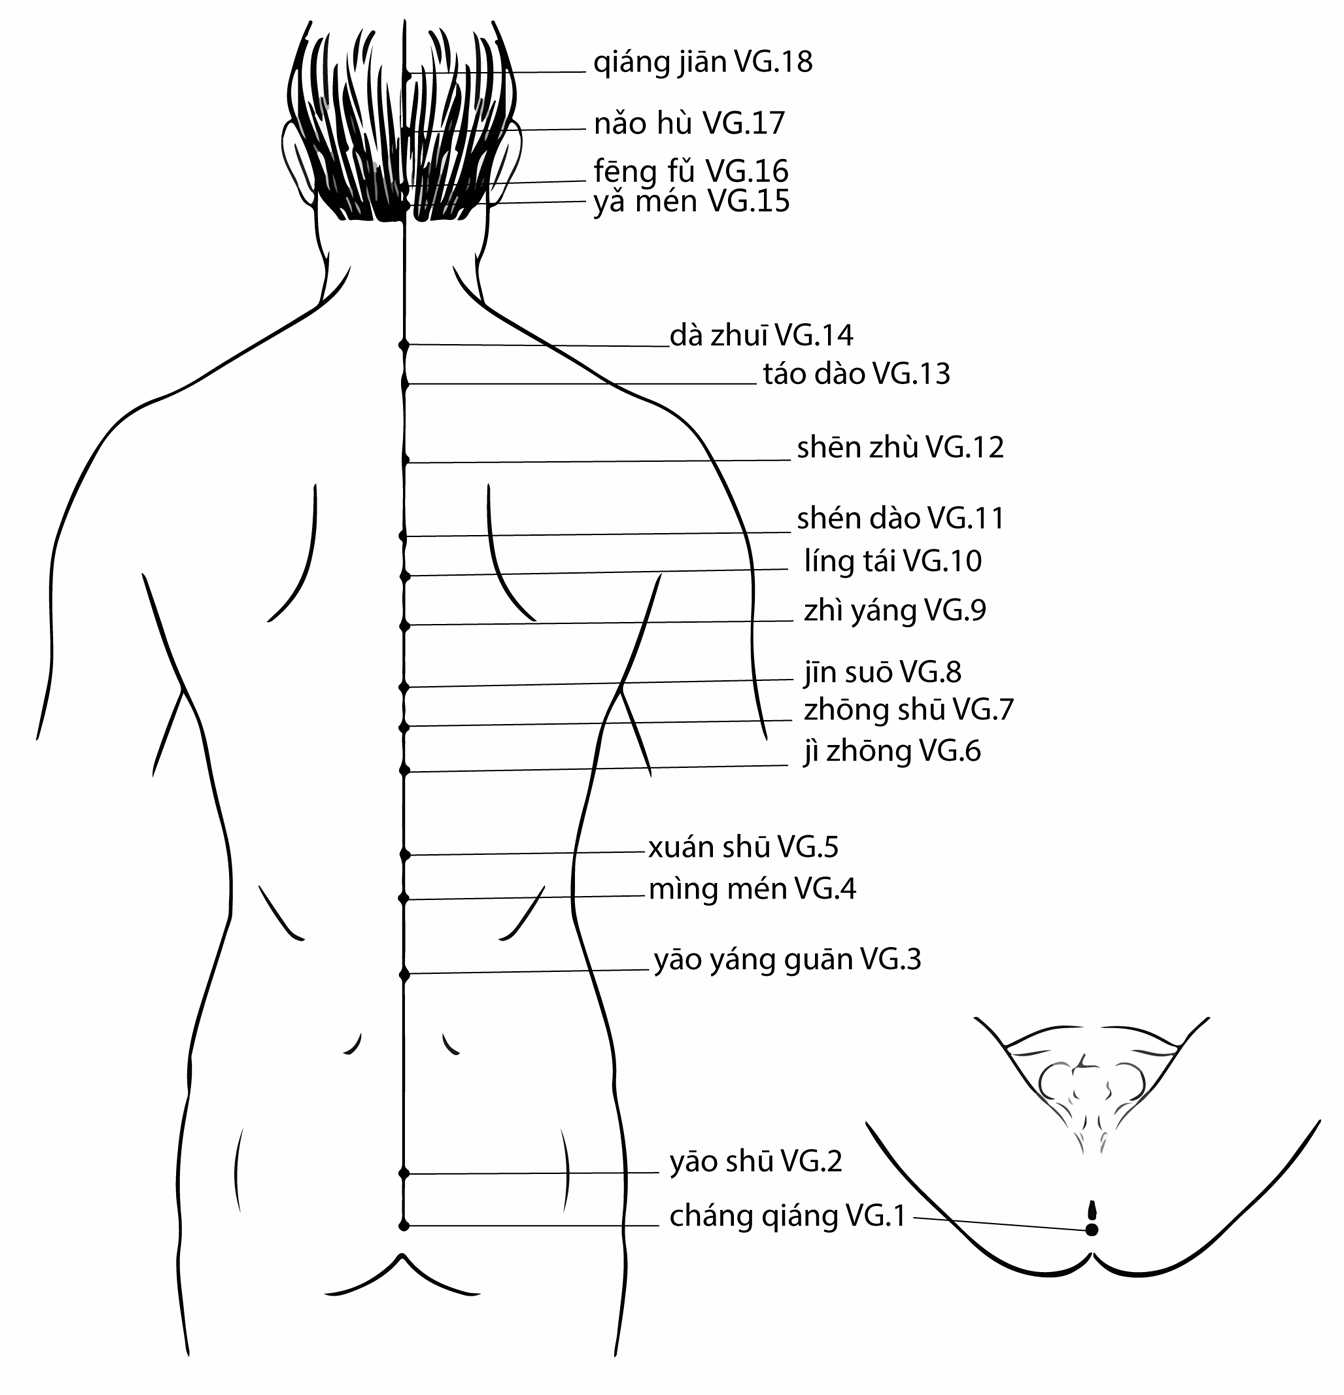 Acupuncture Point Yamen Du-15 (illustration, picture, view, show, demonstration, location)